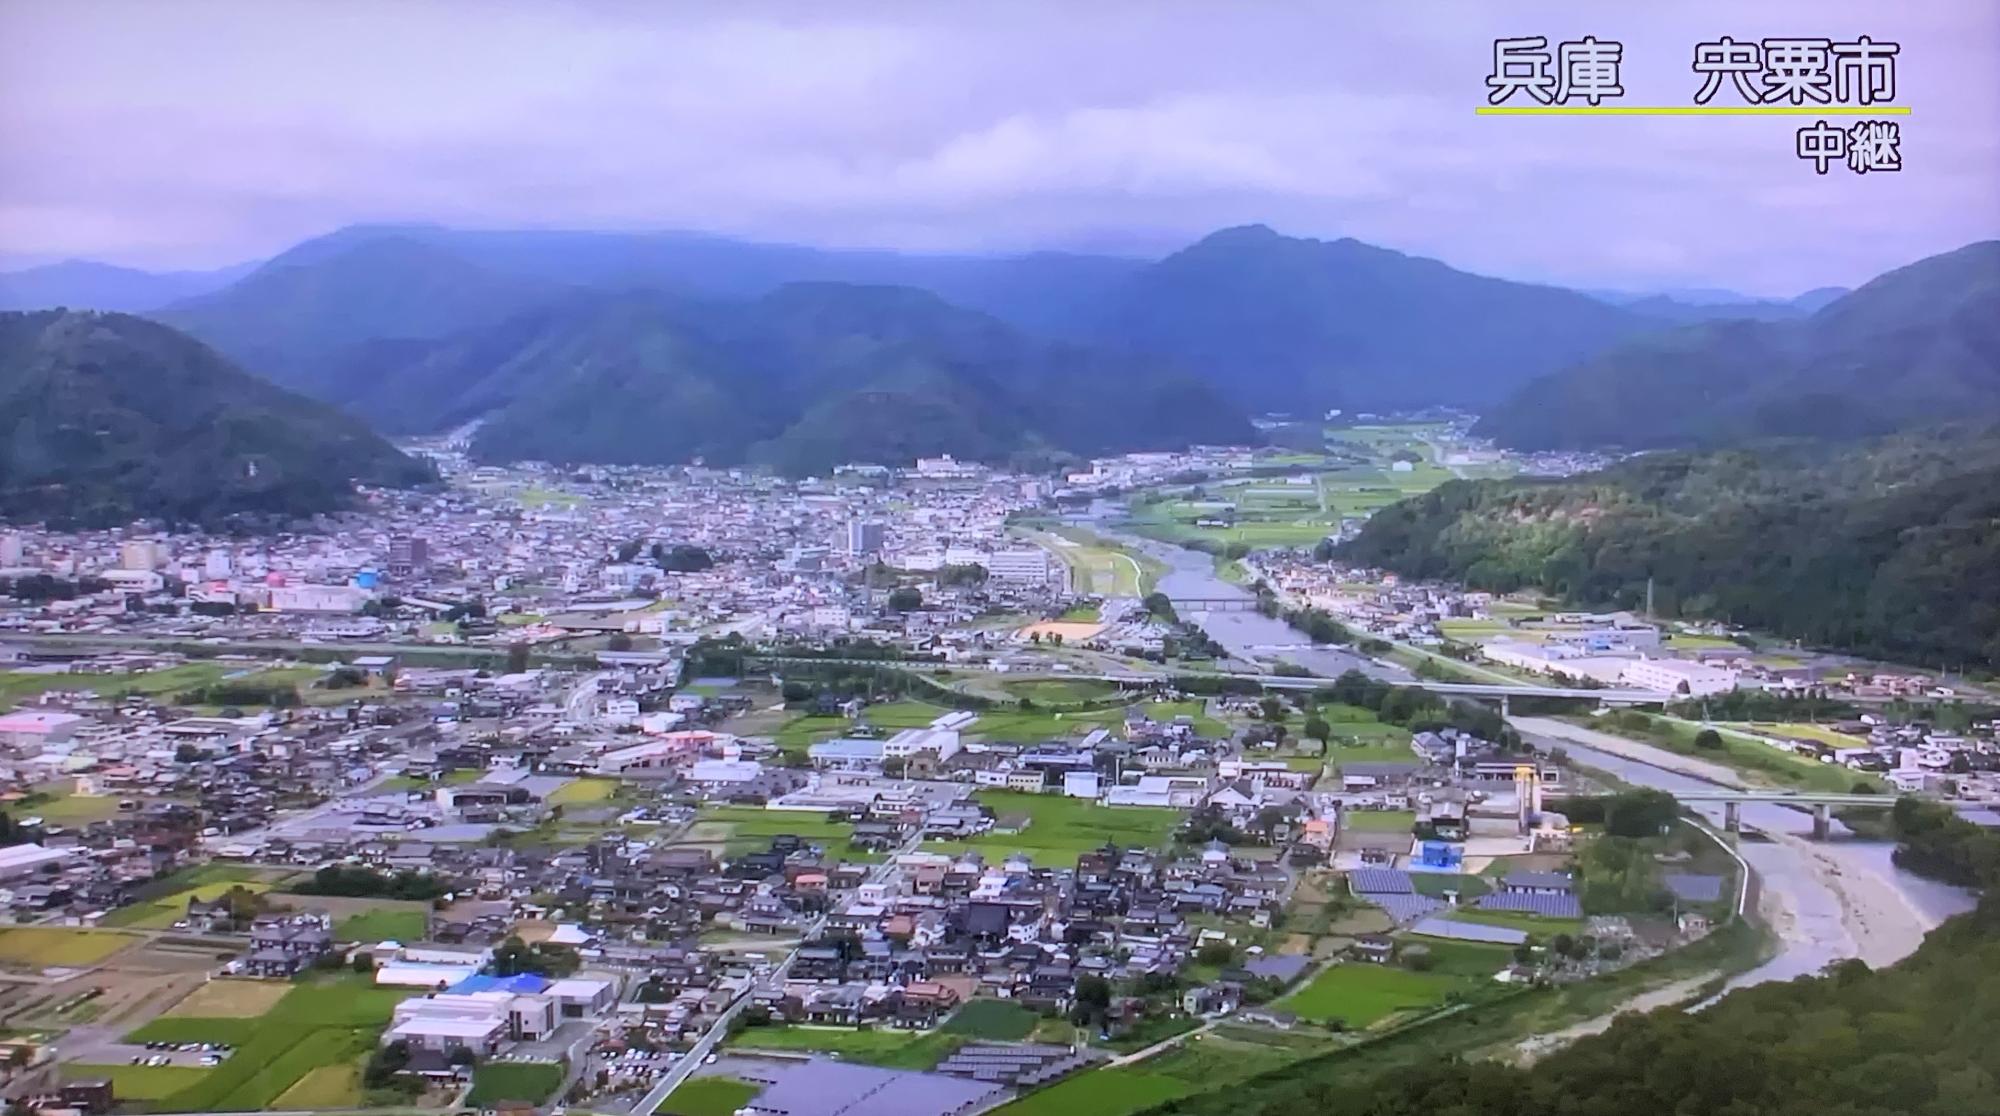 NHKの天気カメラで映し出された宍粟の市街地の映像写真